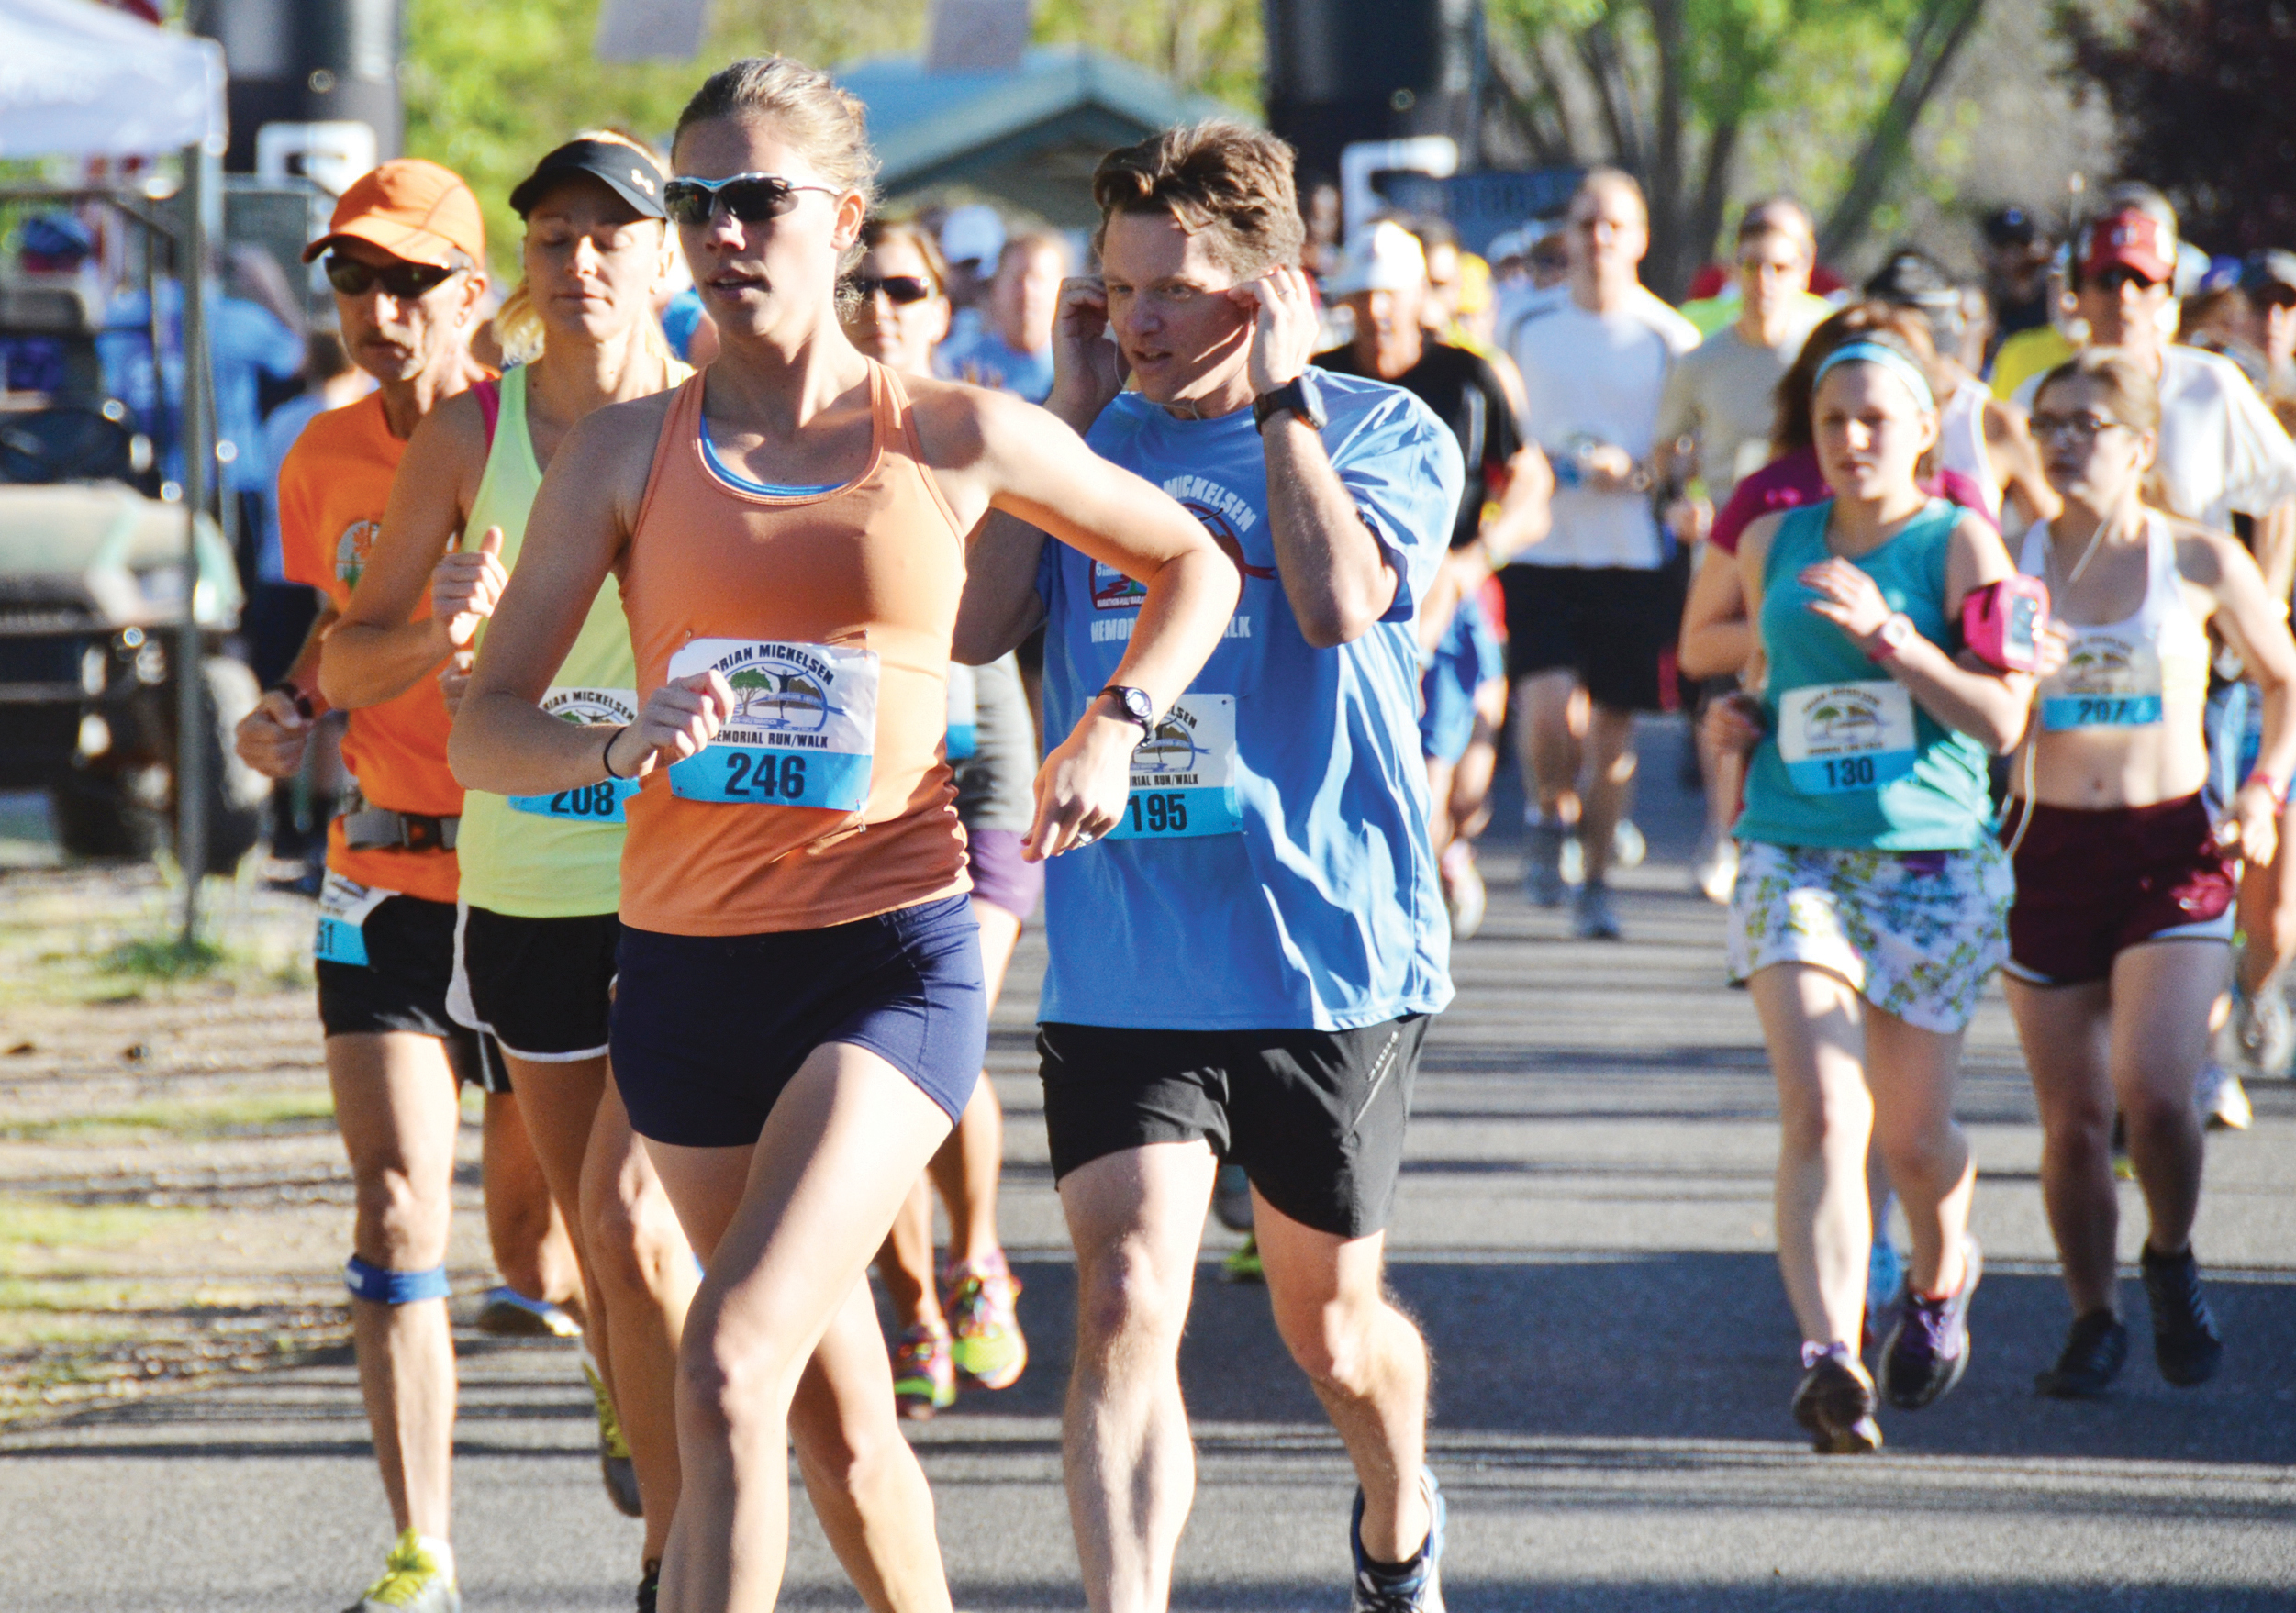 Brian Mickelsen race ranked among best half marathons in Arizona The